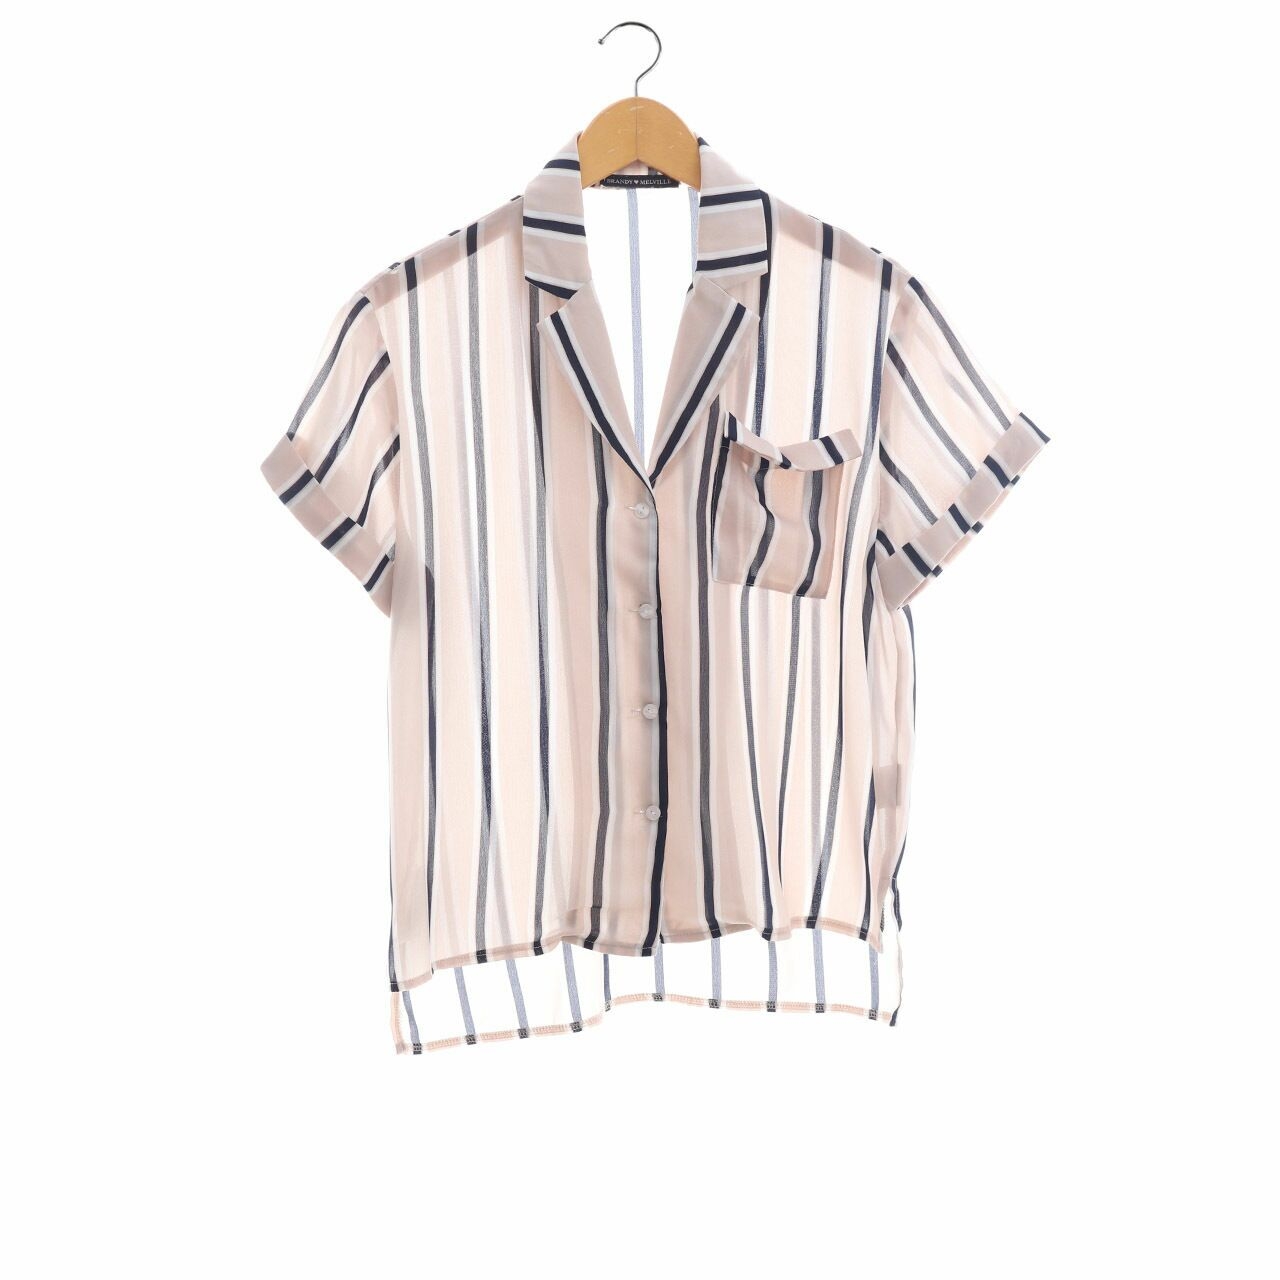 Brandy Melville Beige/Navy Striped Shirt